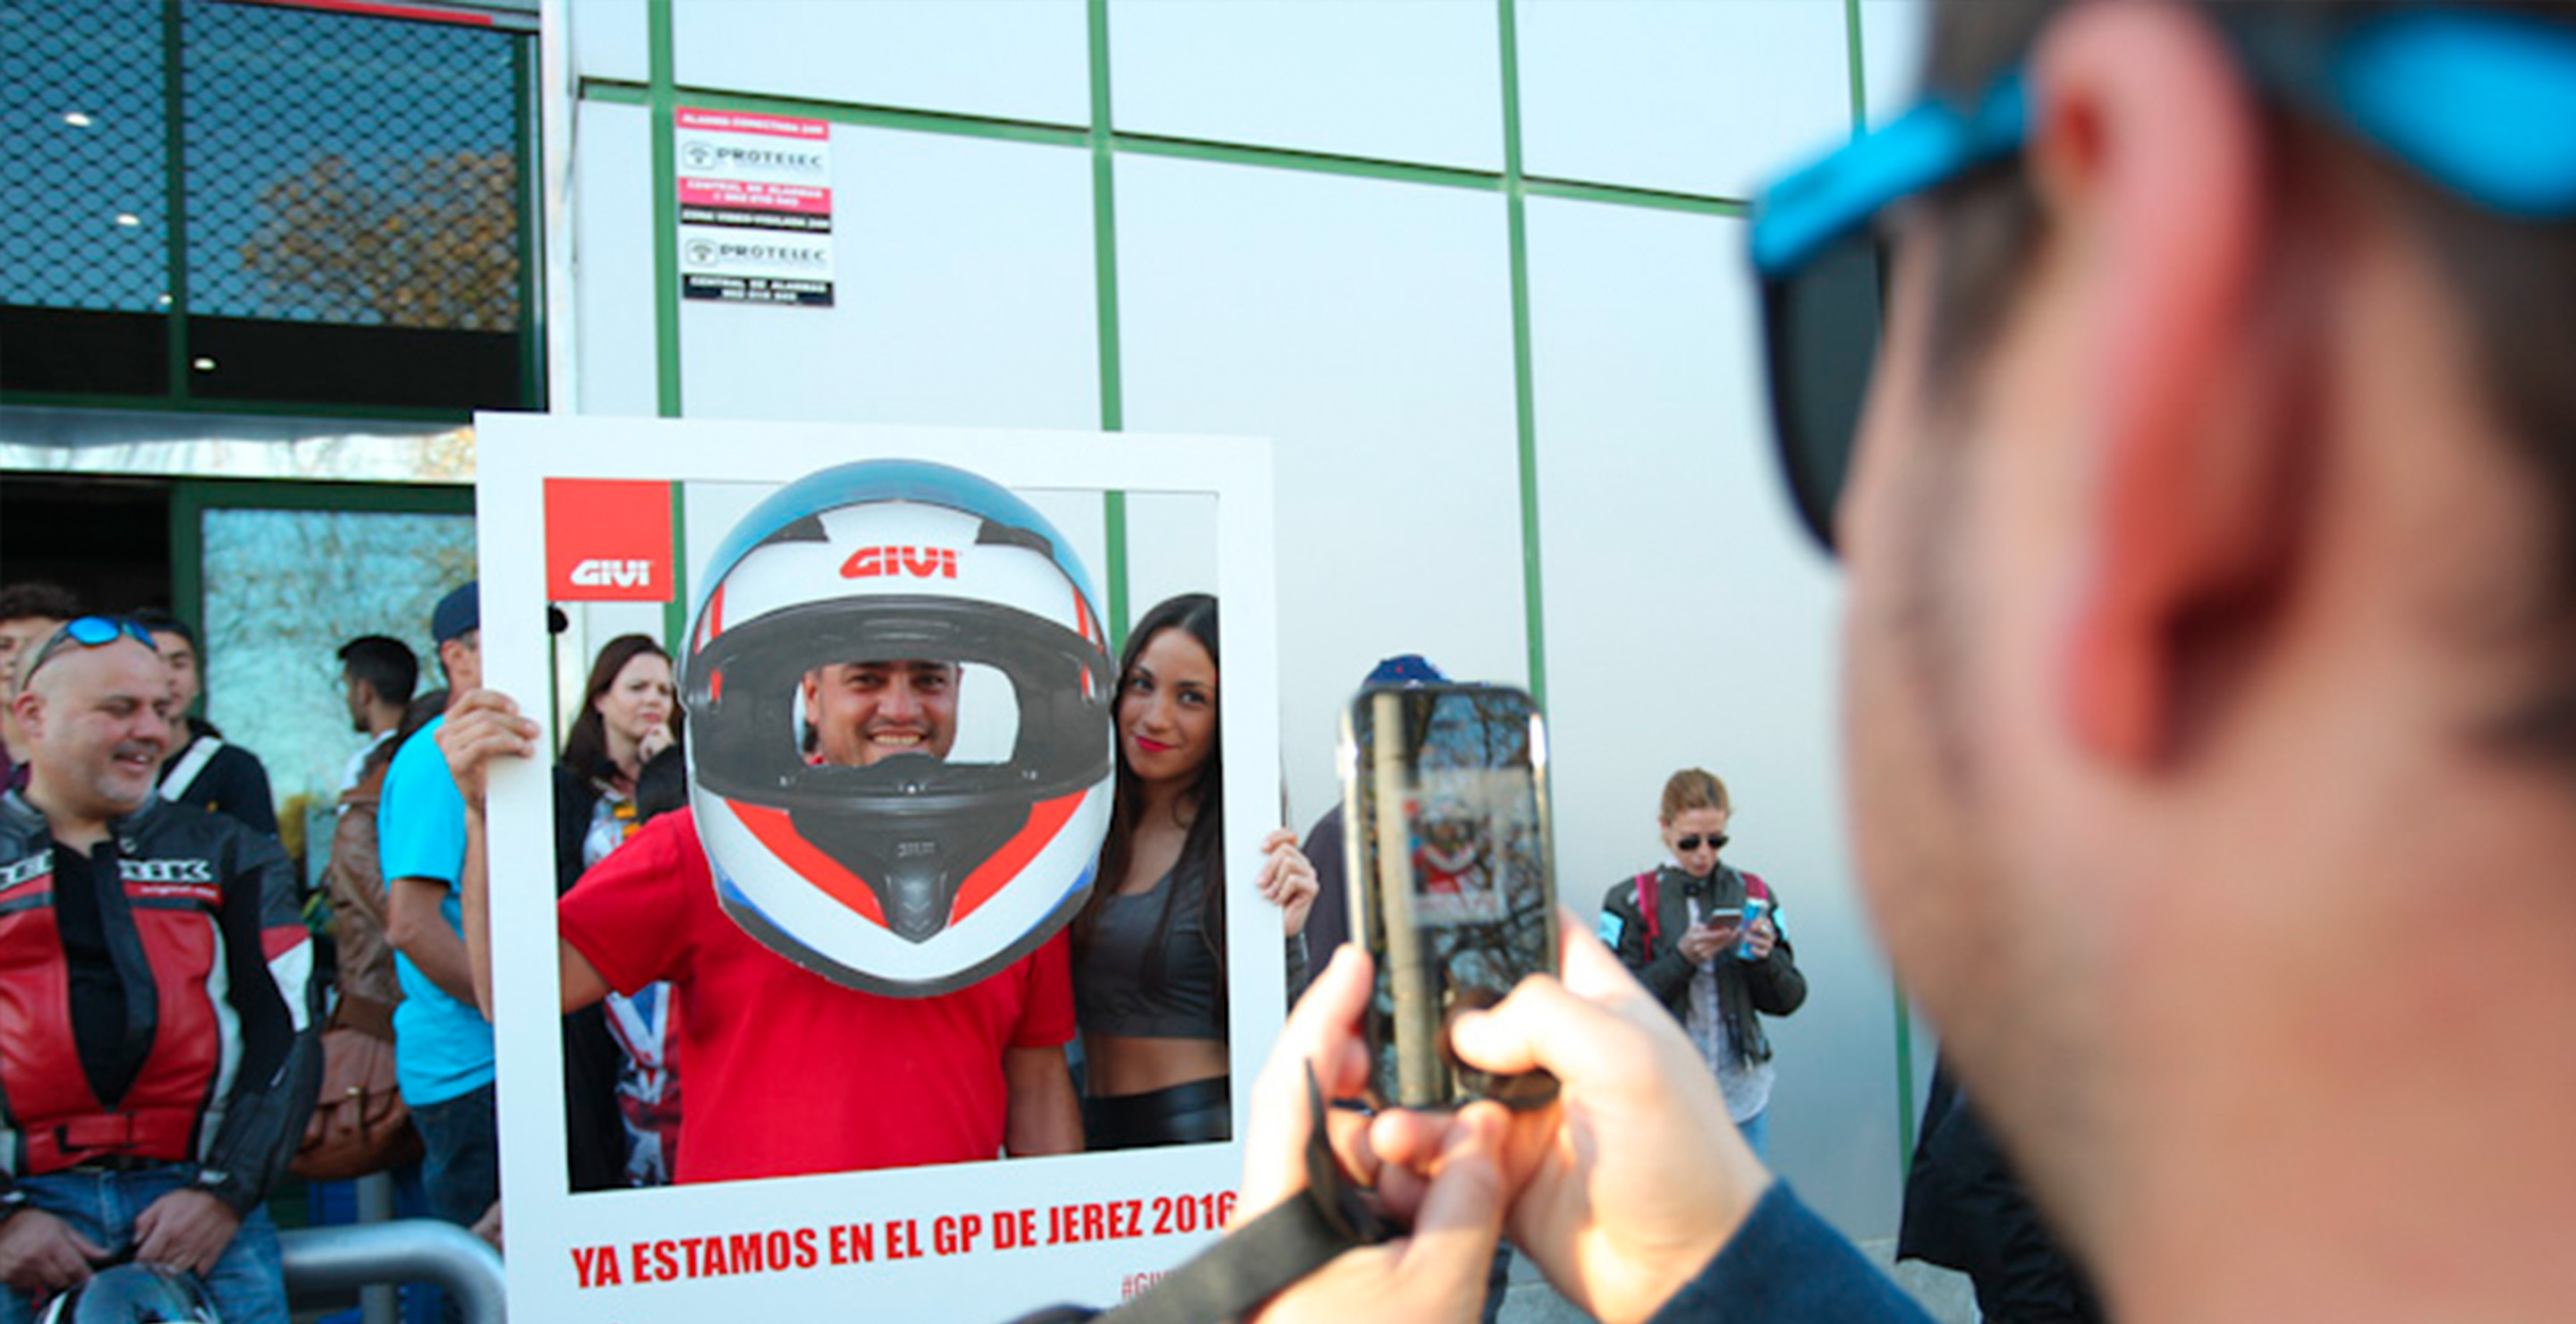 Casco gigante GIVI para accón de marketing de guerrilla durante la celebración del Gran Premio de Motociclismo de Jerez 2014